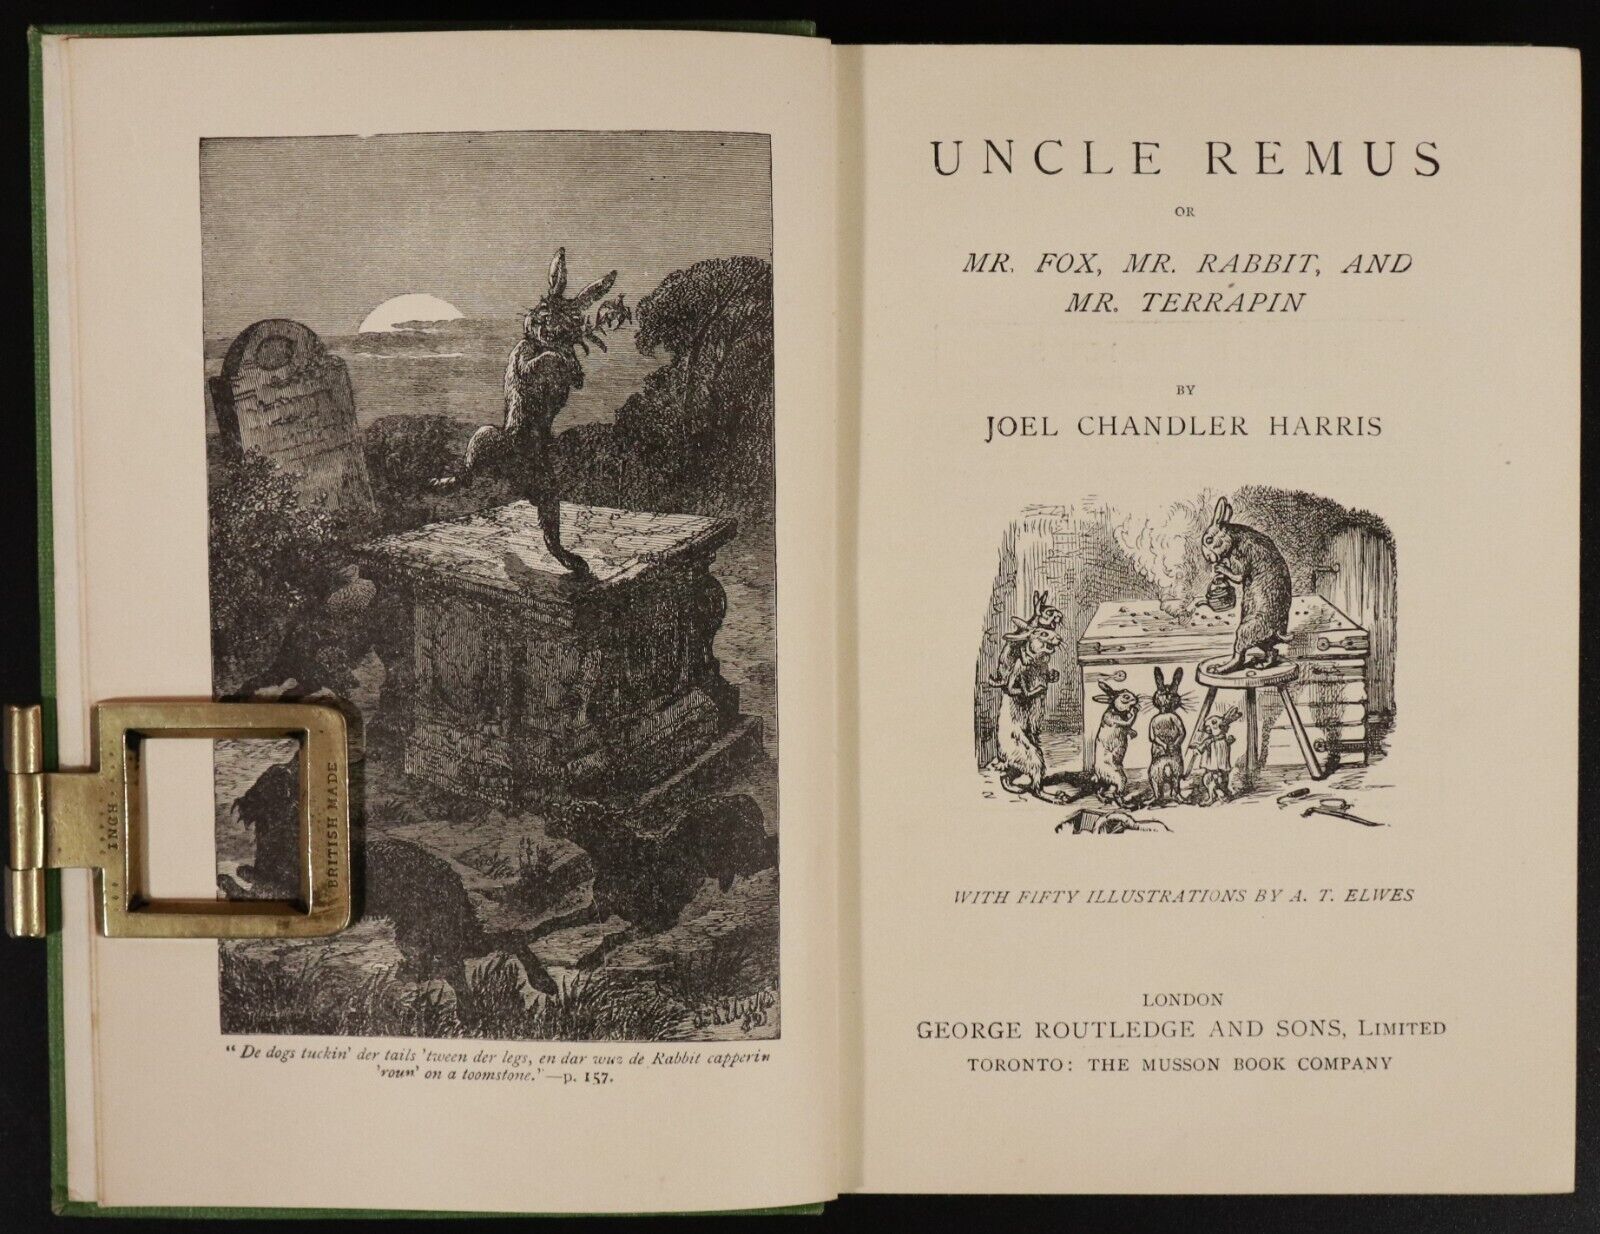 c1900 Uncle Remus by Joel Chandler Harris Antique American Fiction Book